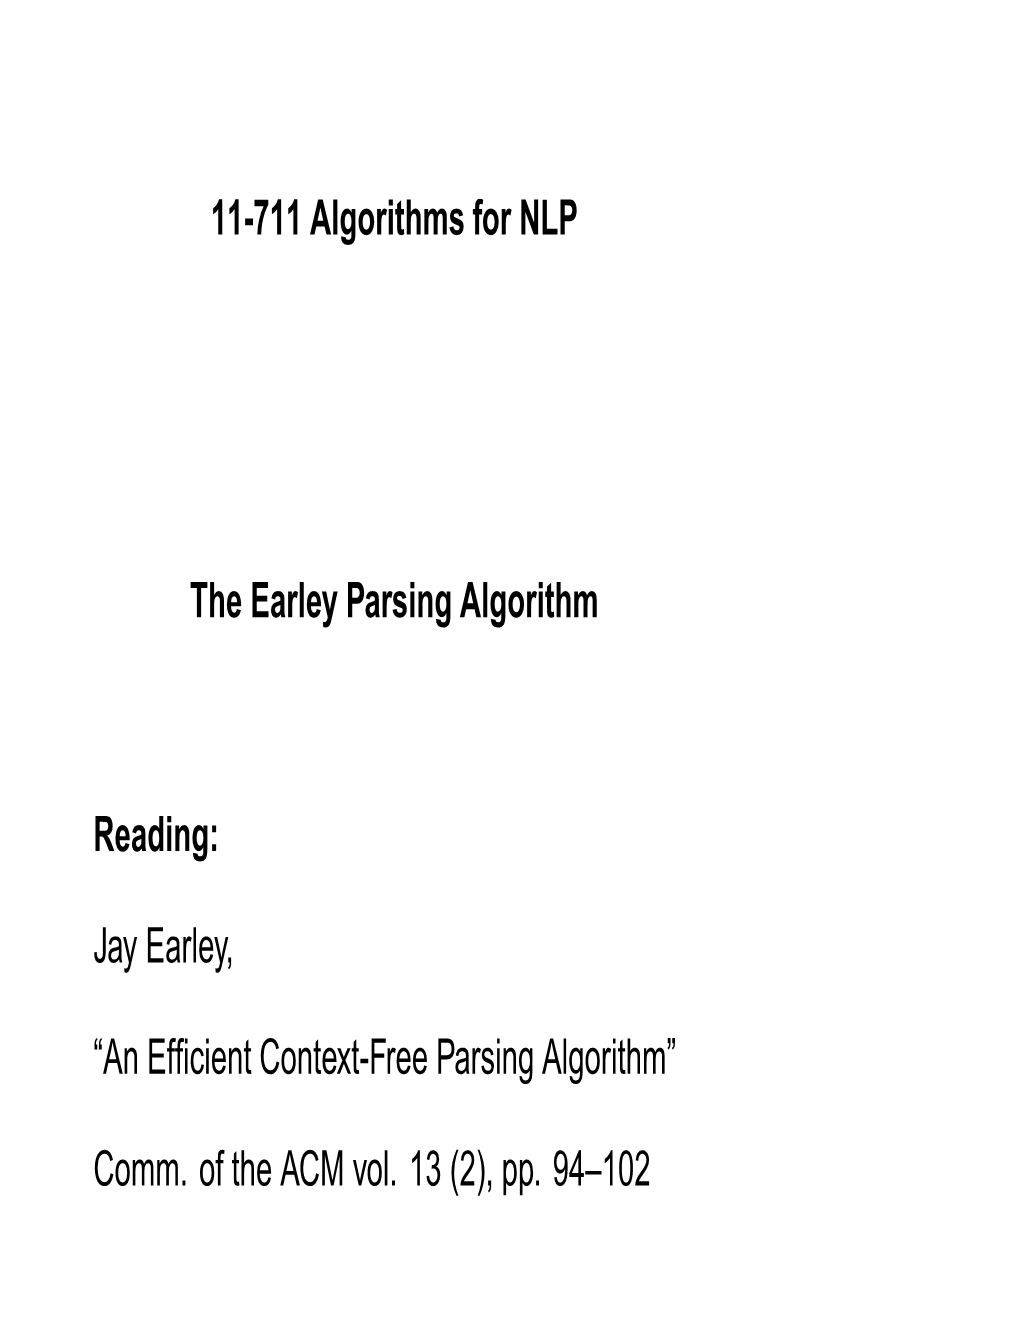 11-711 Algorithms for NLP the Earley Parsing Algorithm Reading